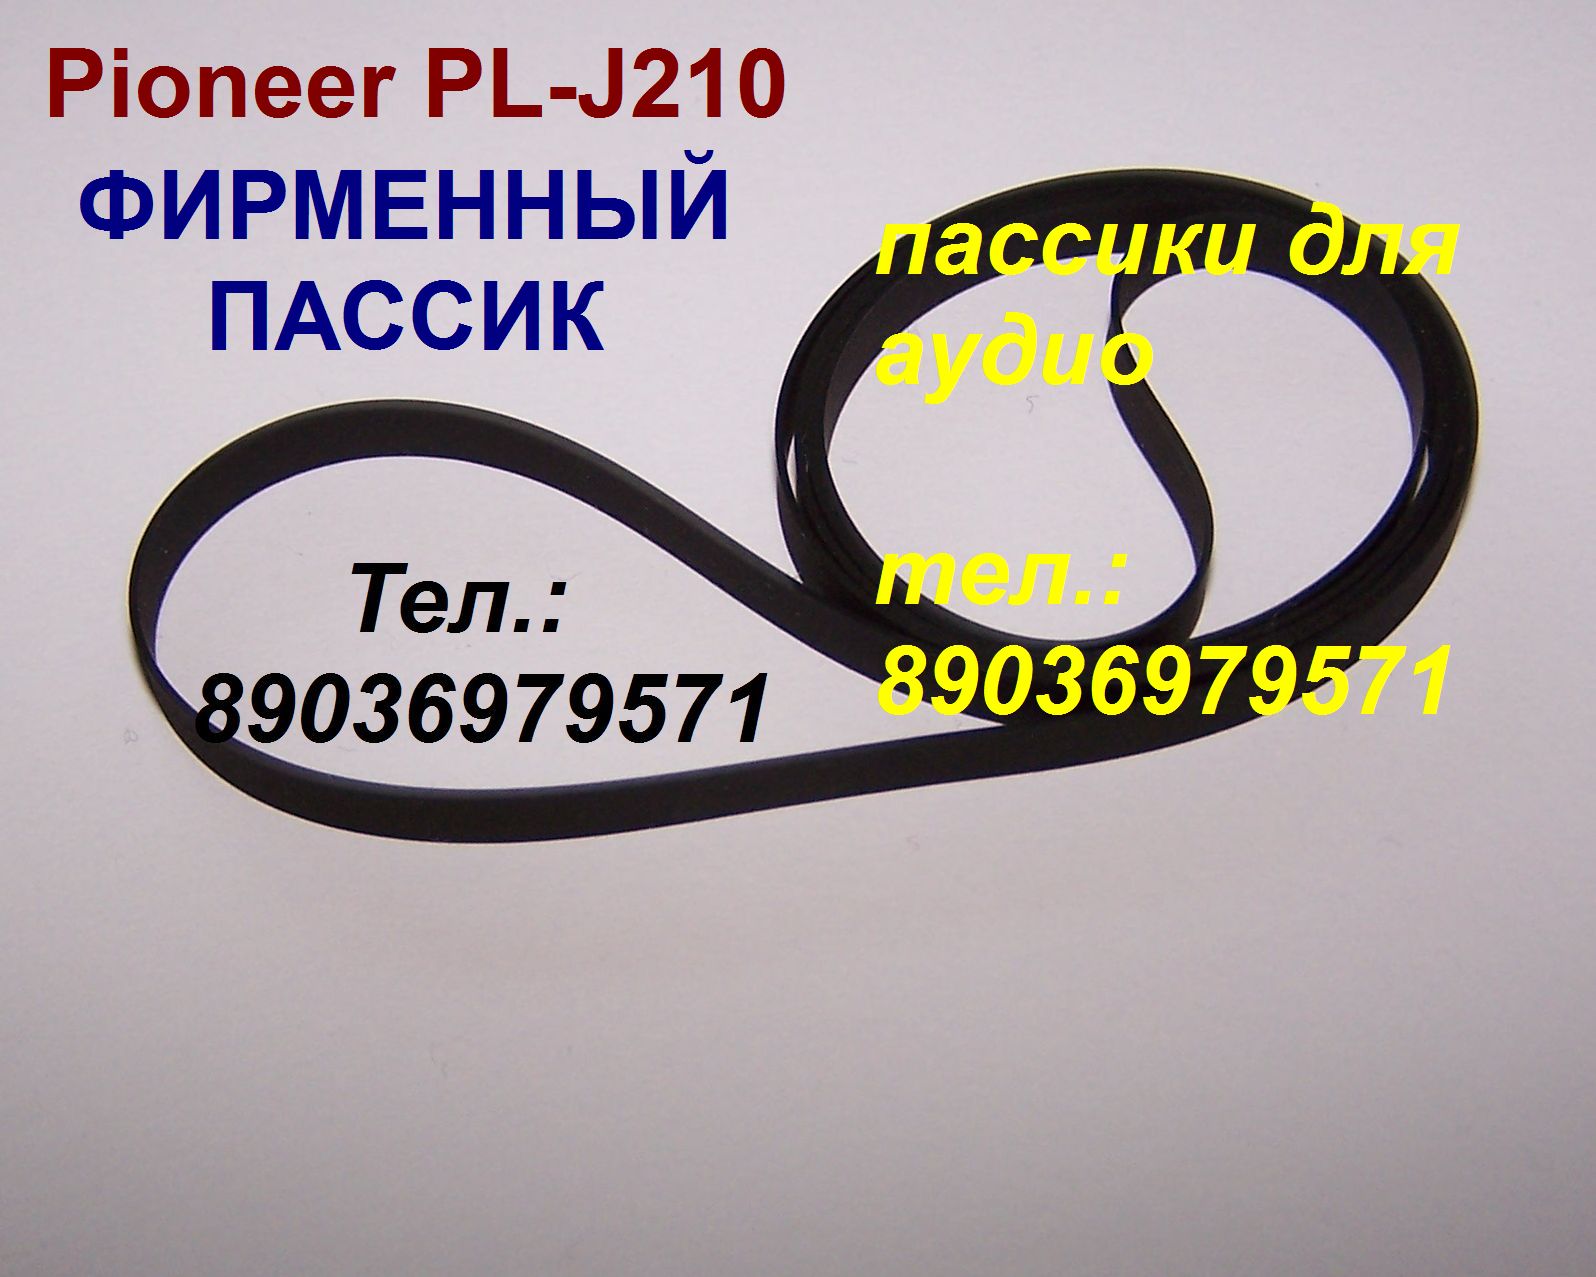 PL-J210 пассик для Pioneer в городе Москва, фото 1, телефон продавца: +7 (903) 697-95-71